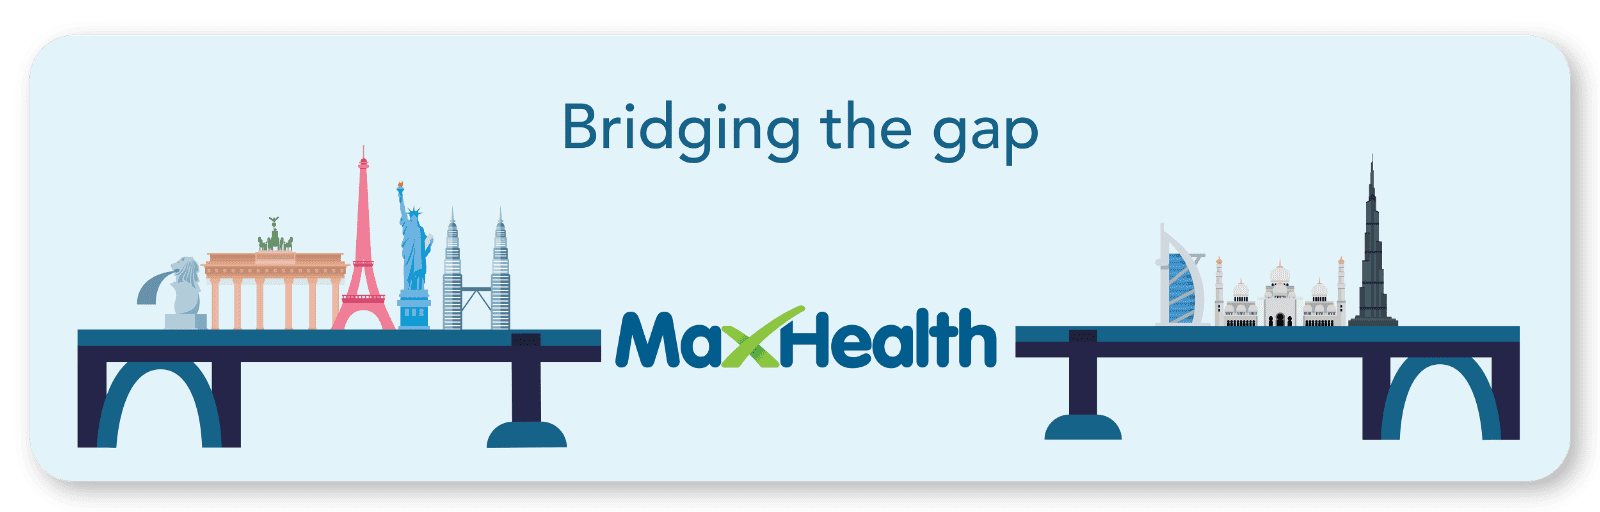 MaxHealth is bridging the gap